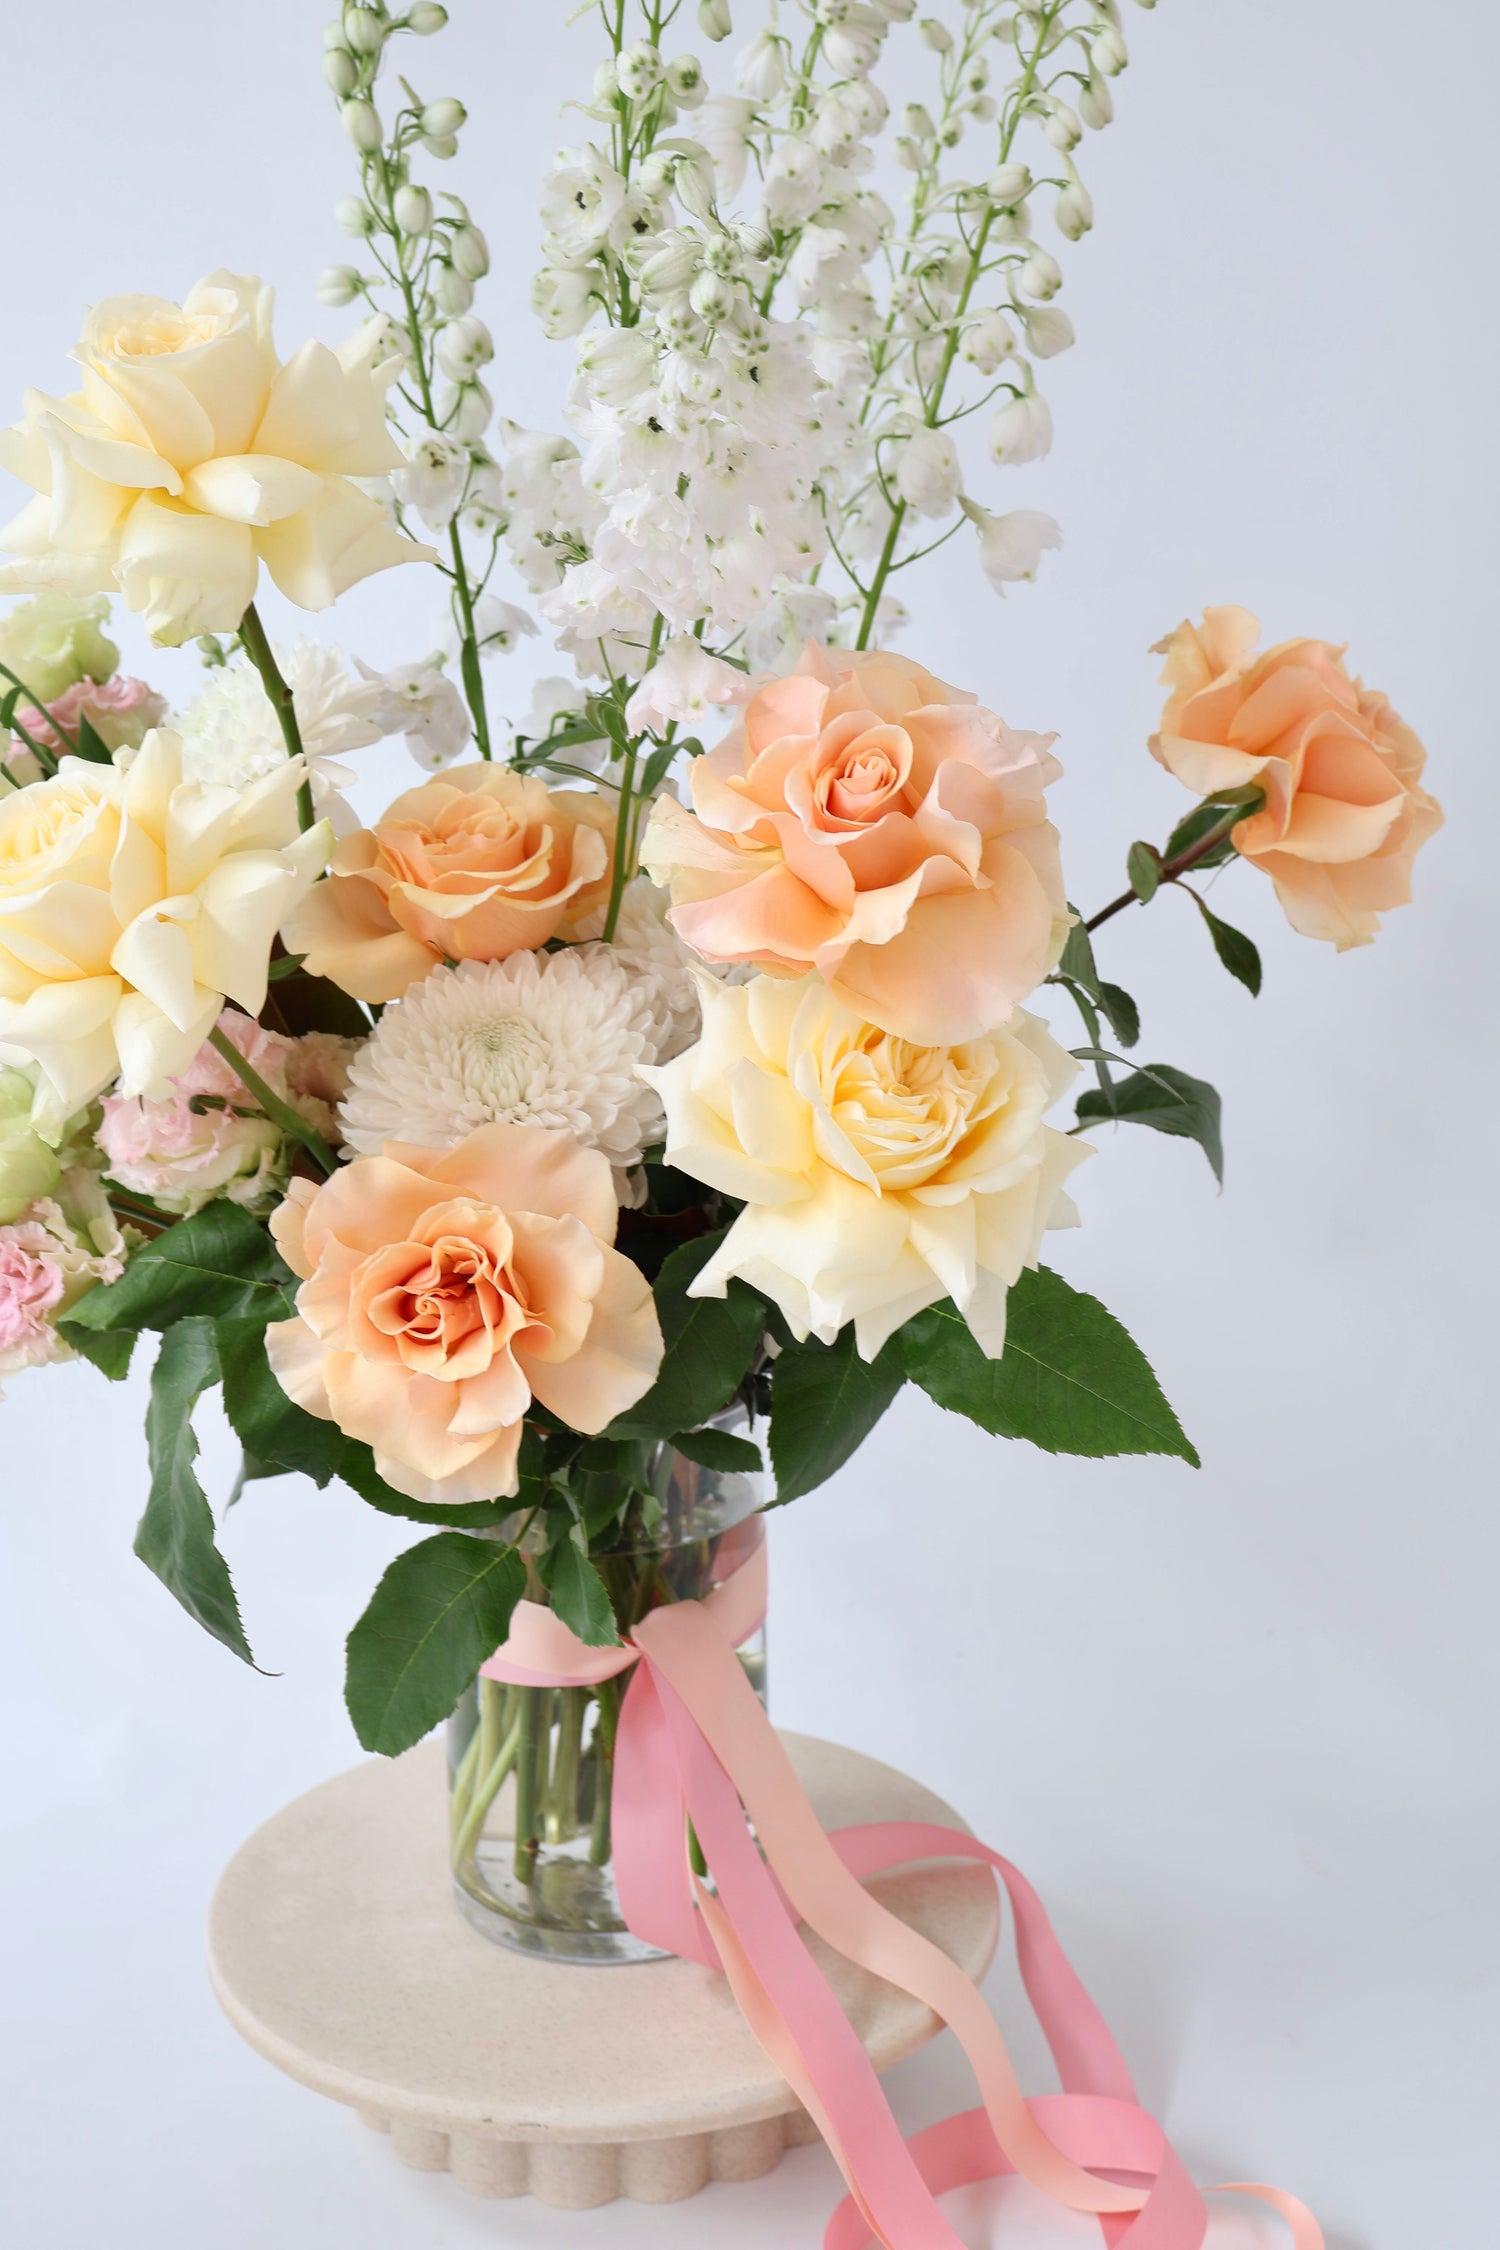 A deluxe fresh flower arrangement in glass vase with Dr Joyful rose and vanilla bath soak.